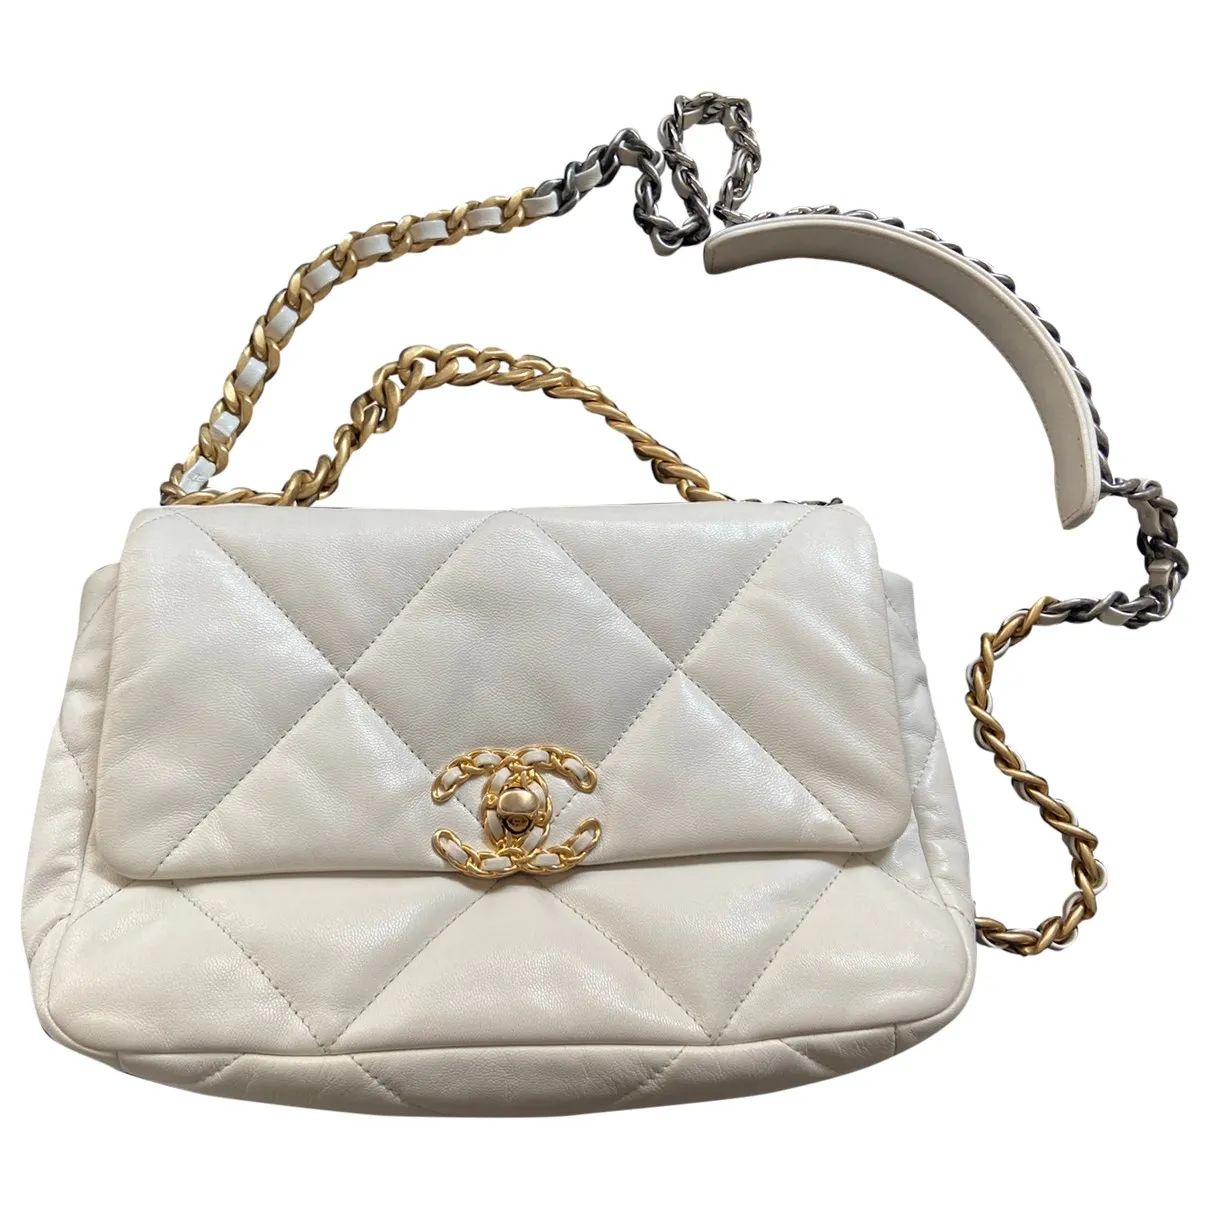 Chanel 19 Leder Handtaschen | Vestiaire Collective (Global)